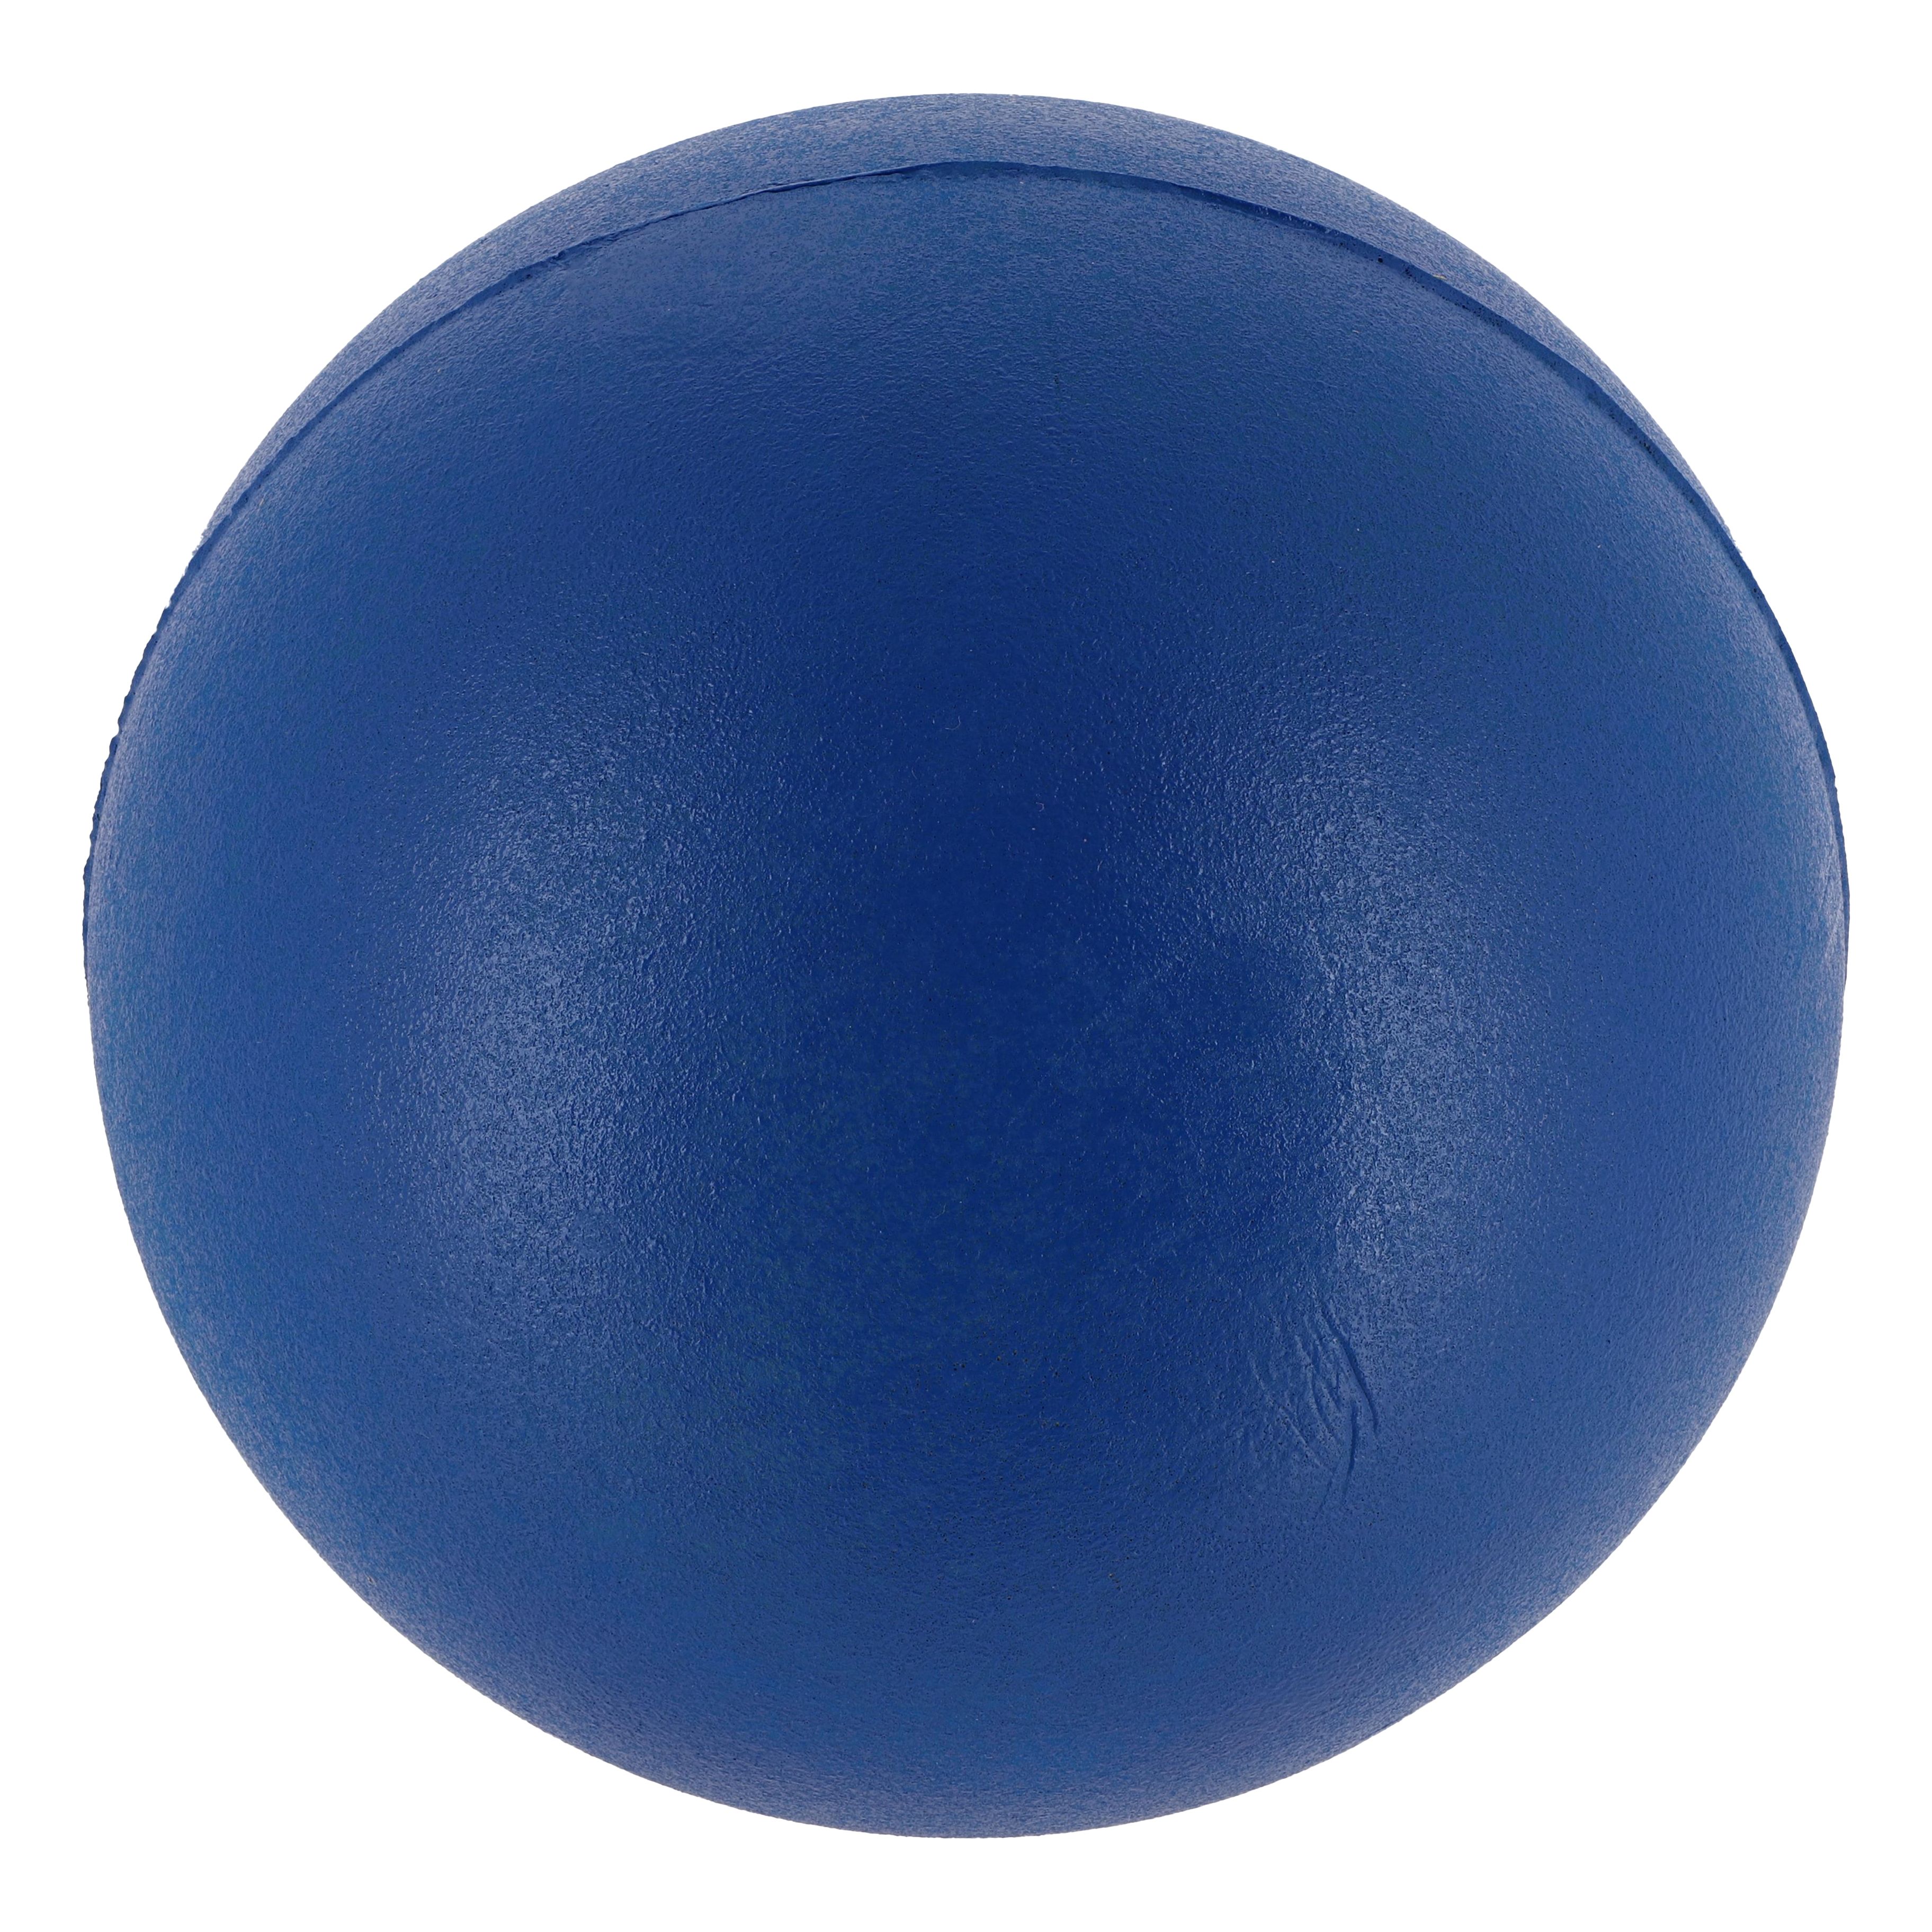 Coated Foam Ball 16cm Blue